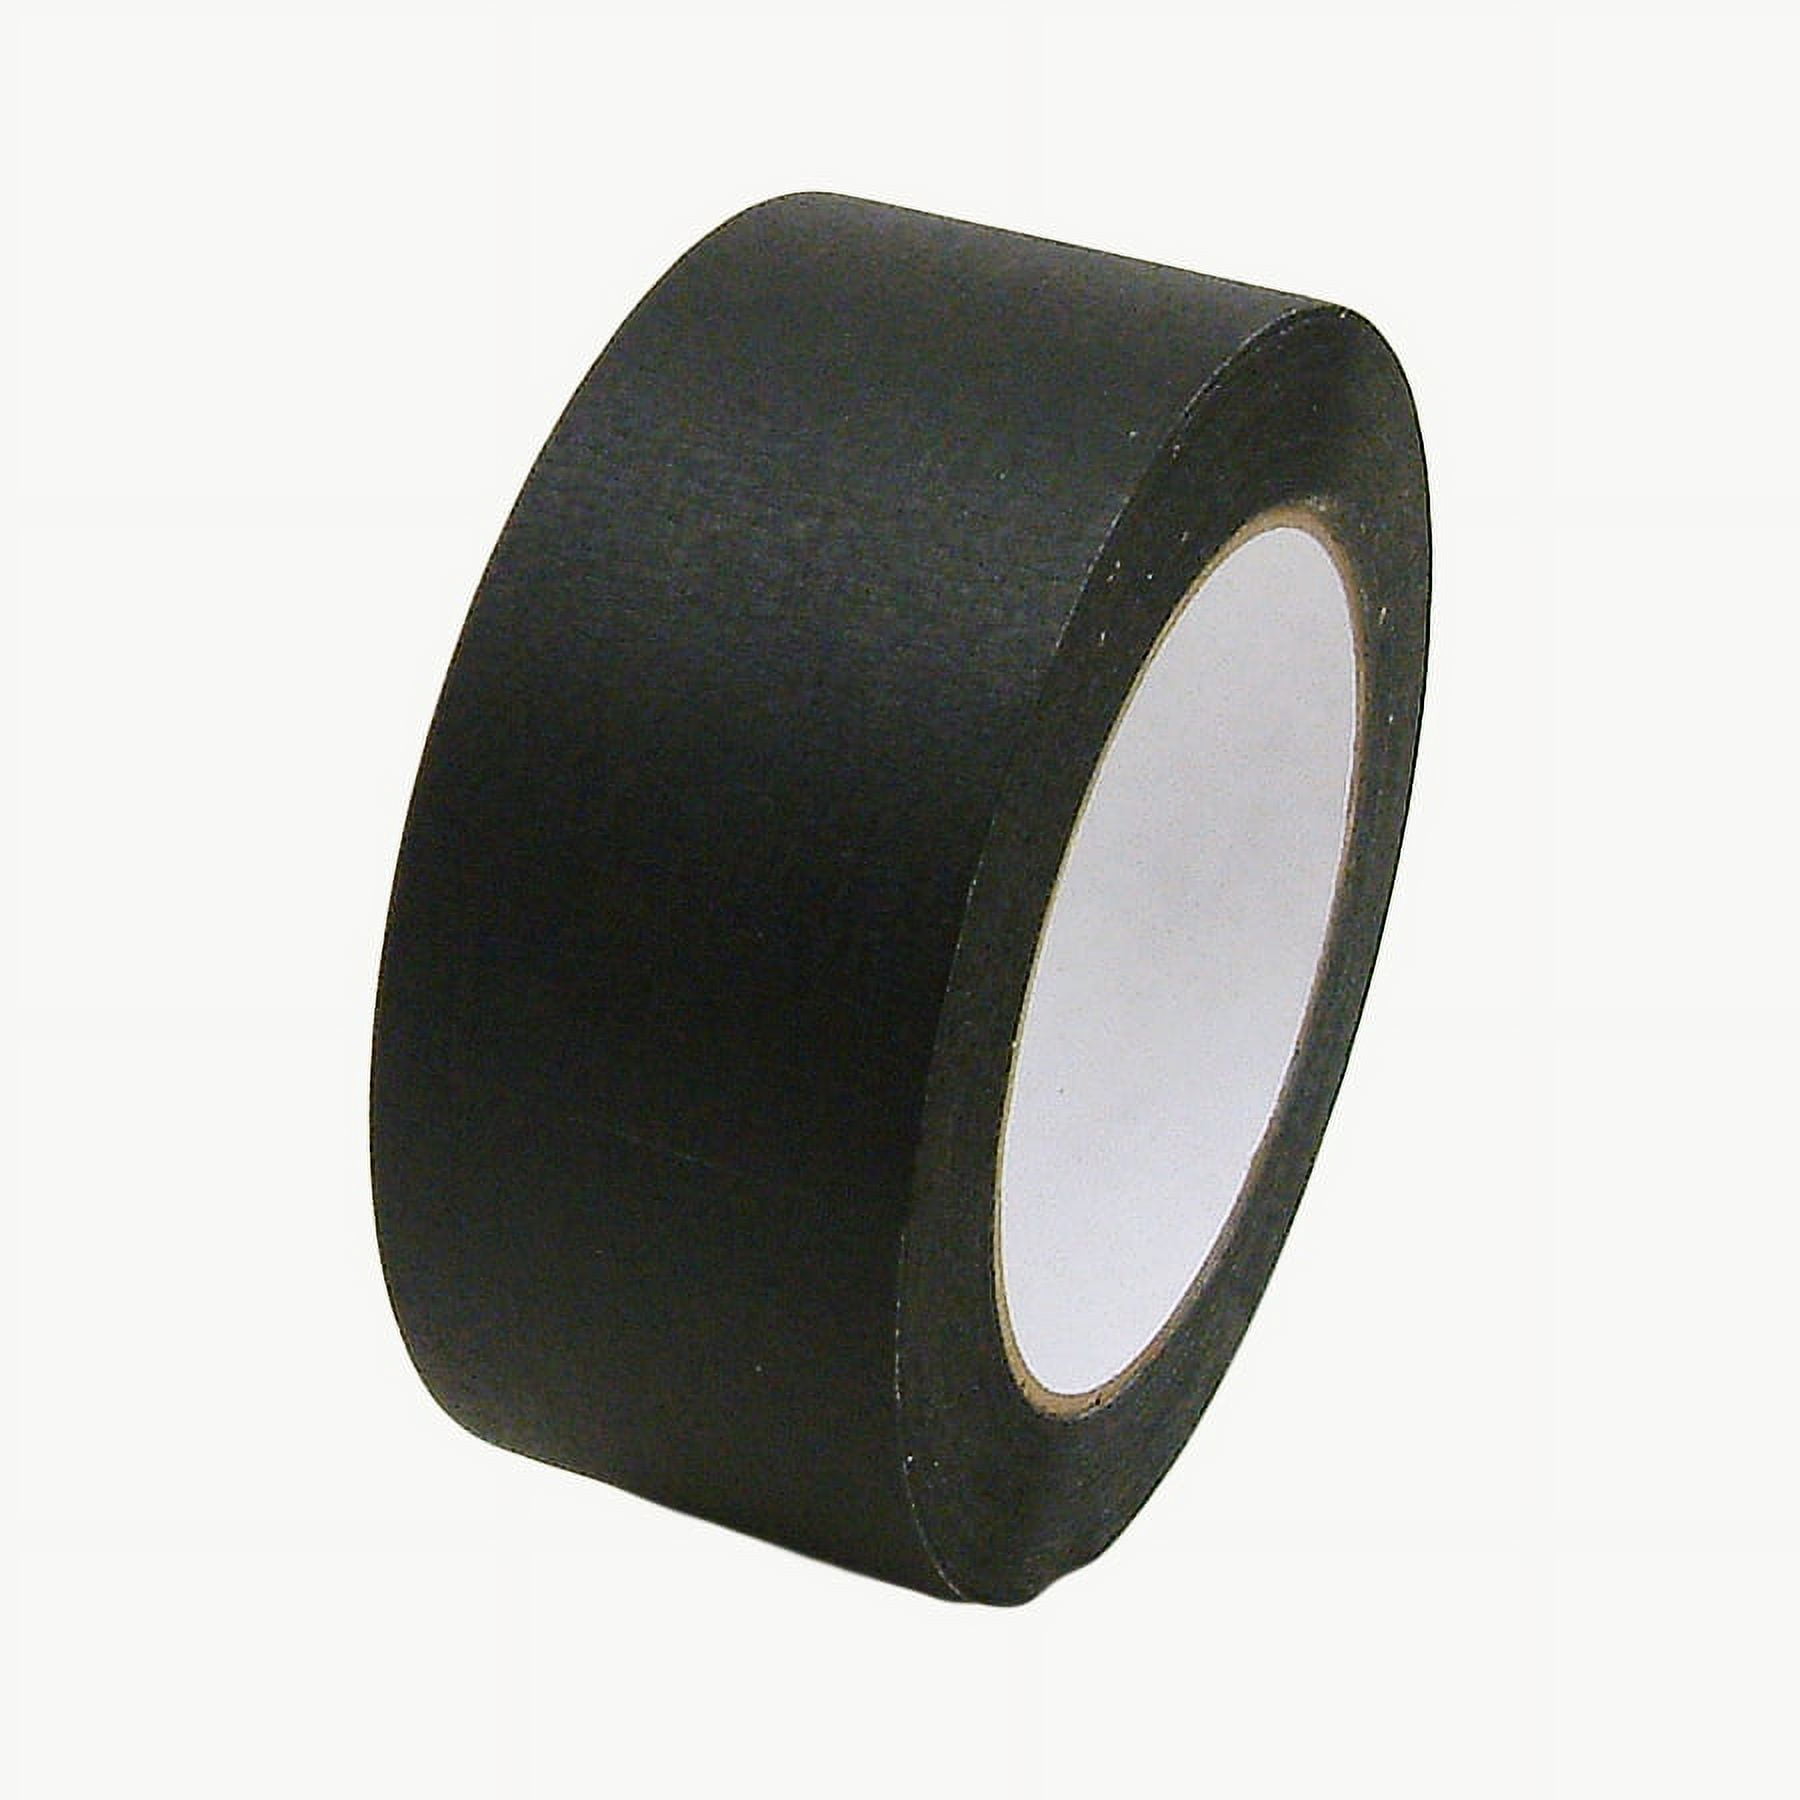 Shurtape Colored Masking Tape .94 x 60 yards Black 959220